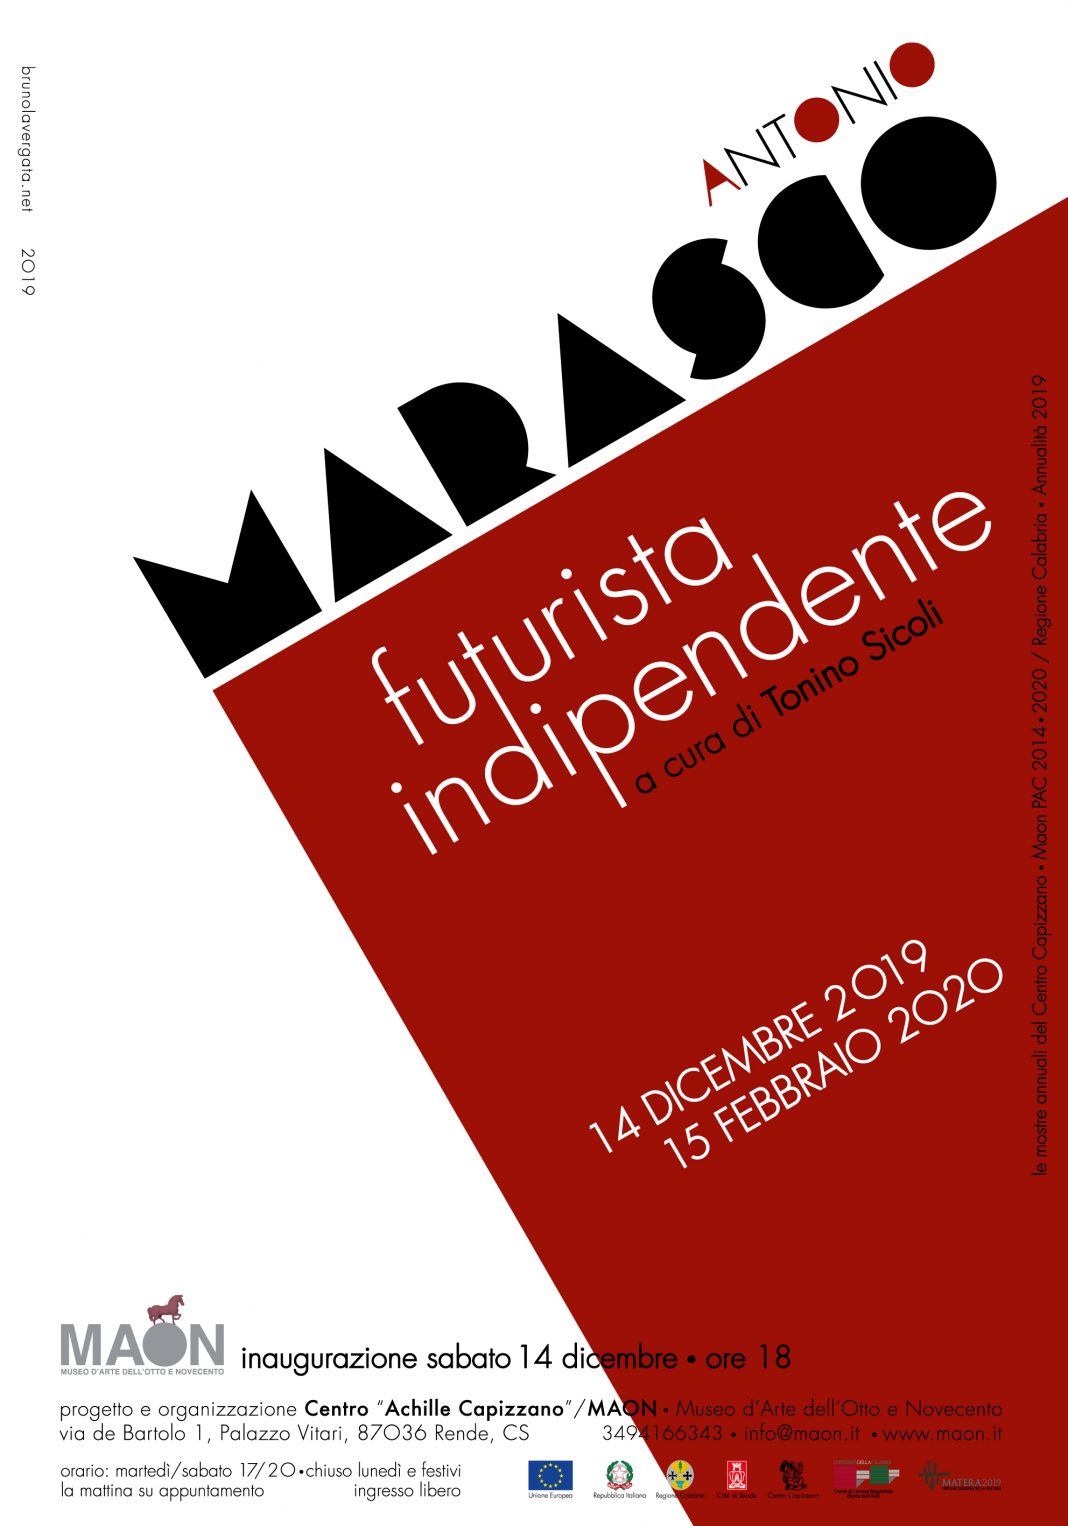 Antonio Marasco – Futurista indipendentehttps://www.exibart.com/repository/media/2019/12/Marasco-manifesto-1068x1526.jpg